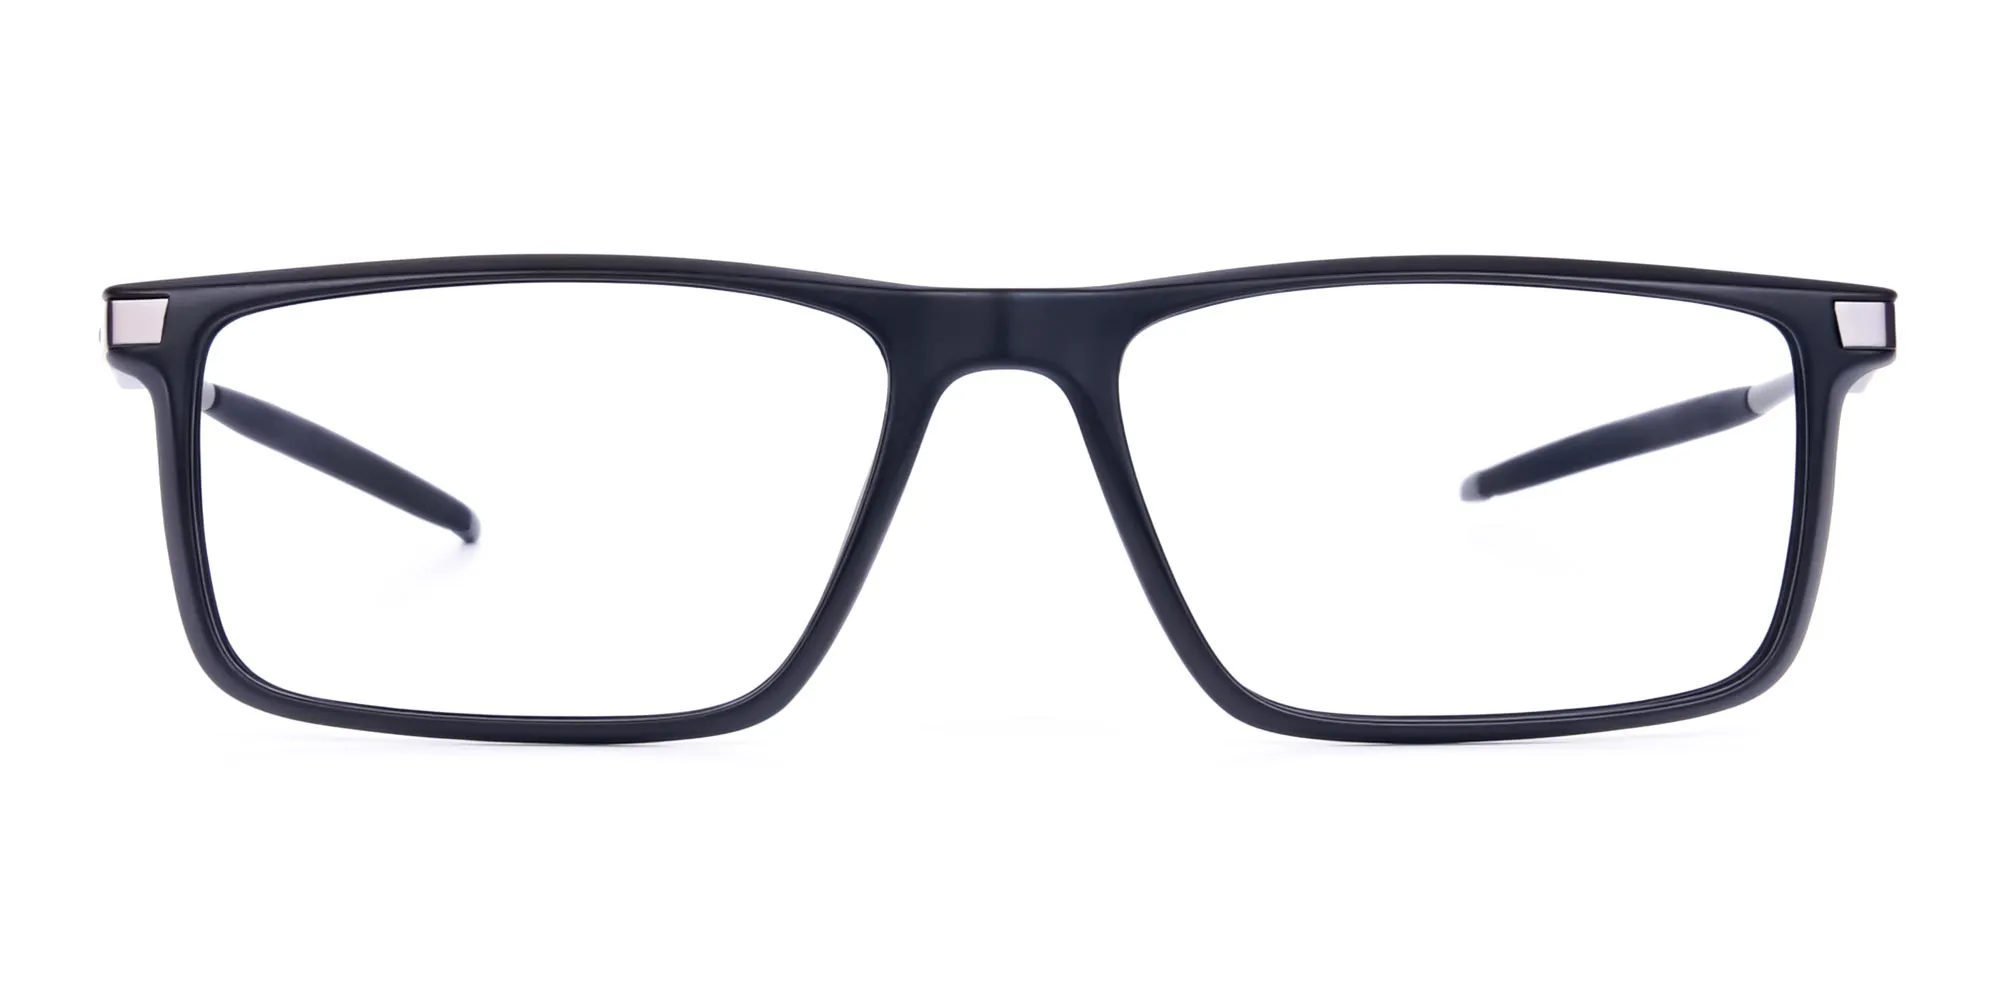 Black full-rimmed prescription sports glasses-2